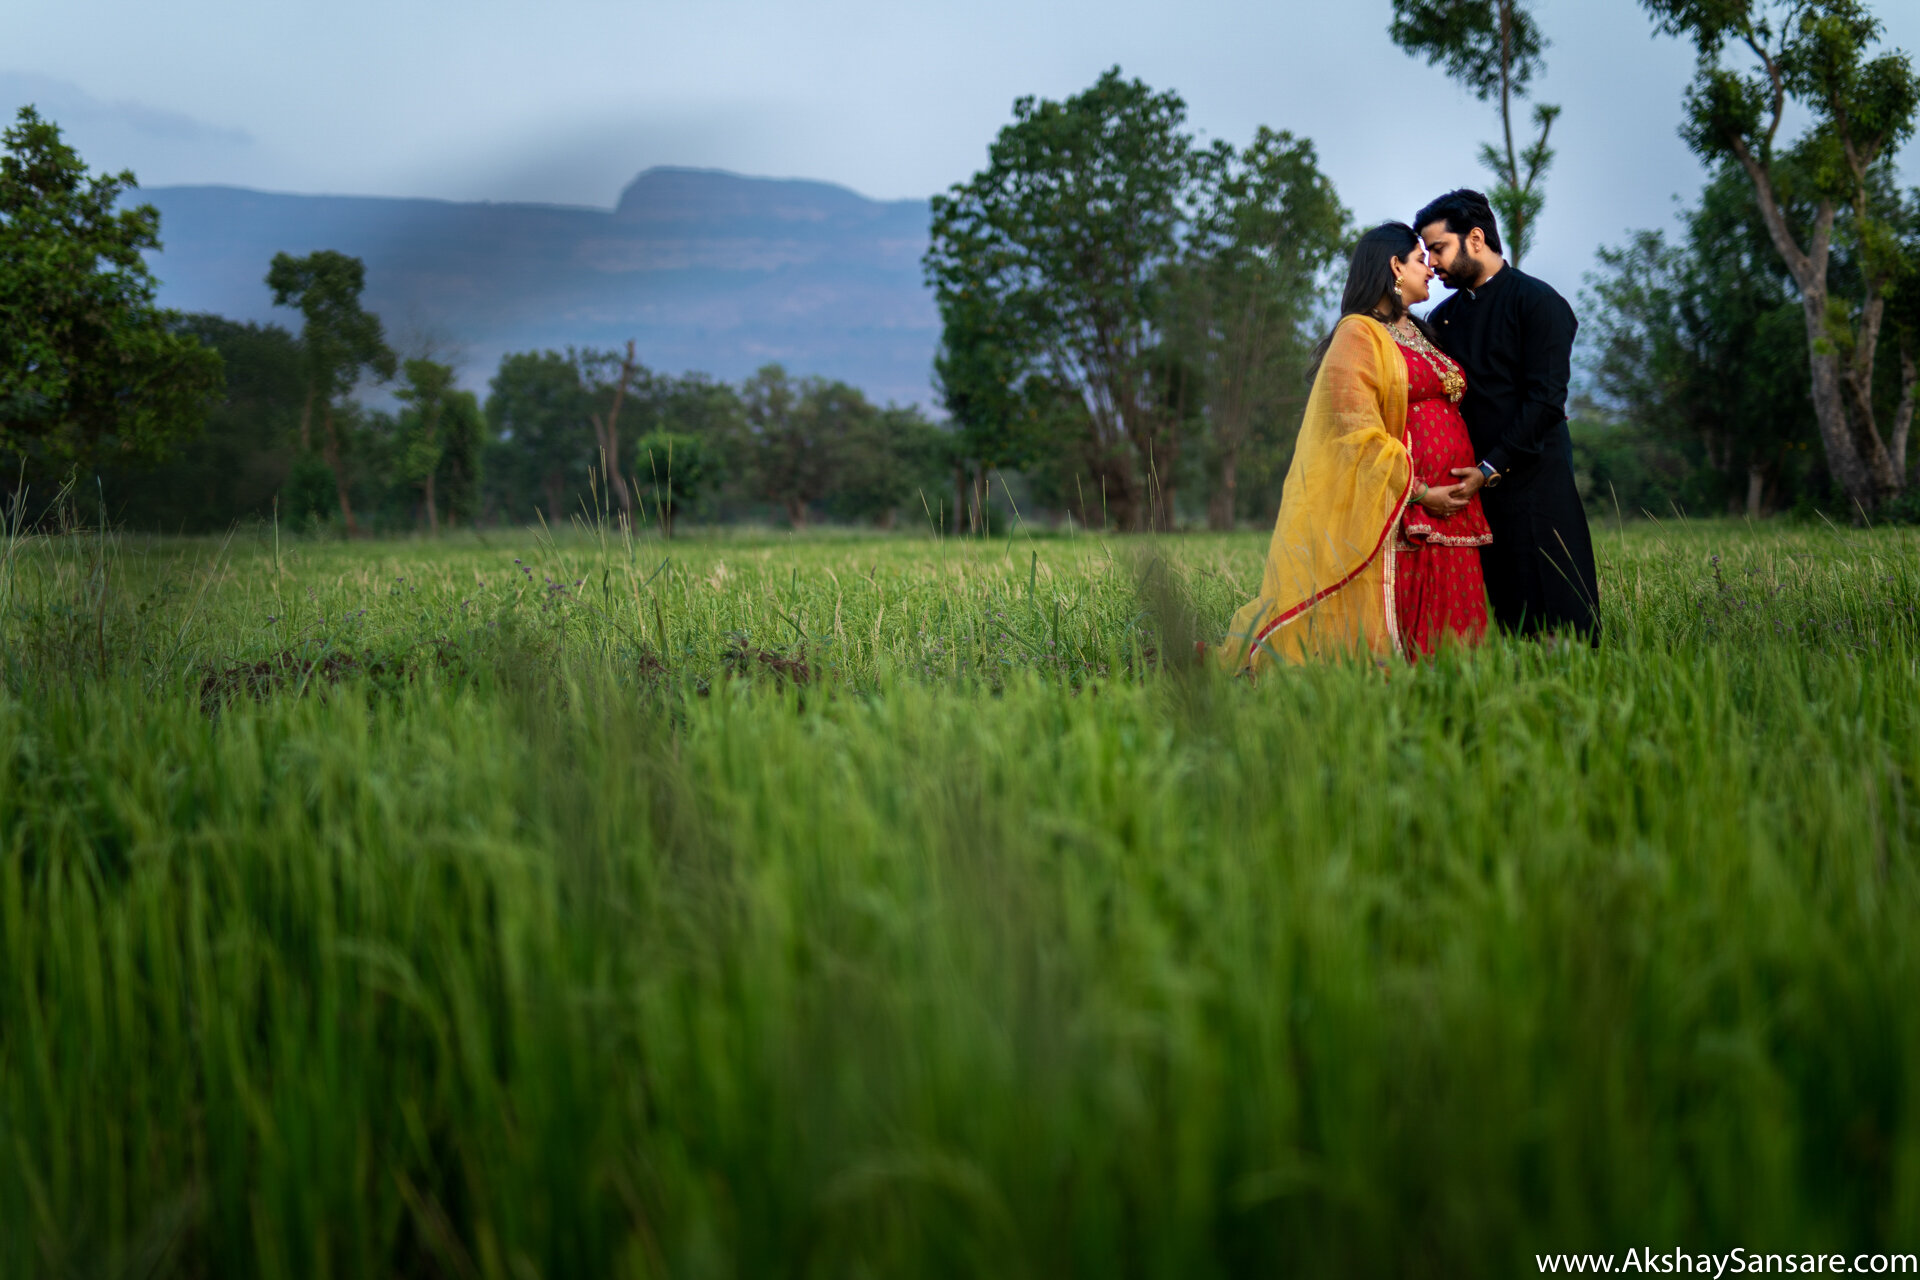 Anuj x Malvika + 1 Akshay Sansare Photography & Films Candid Photographer Best in mumbai Cinematic wedding films-29.jpg